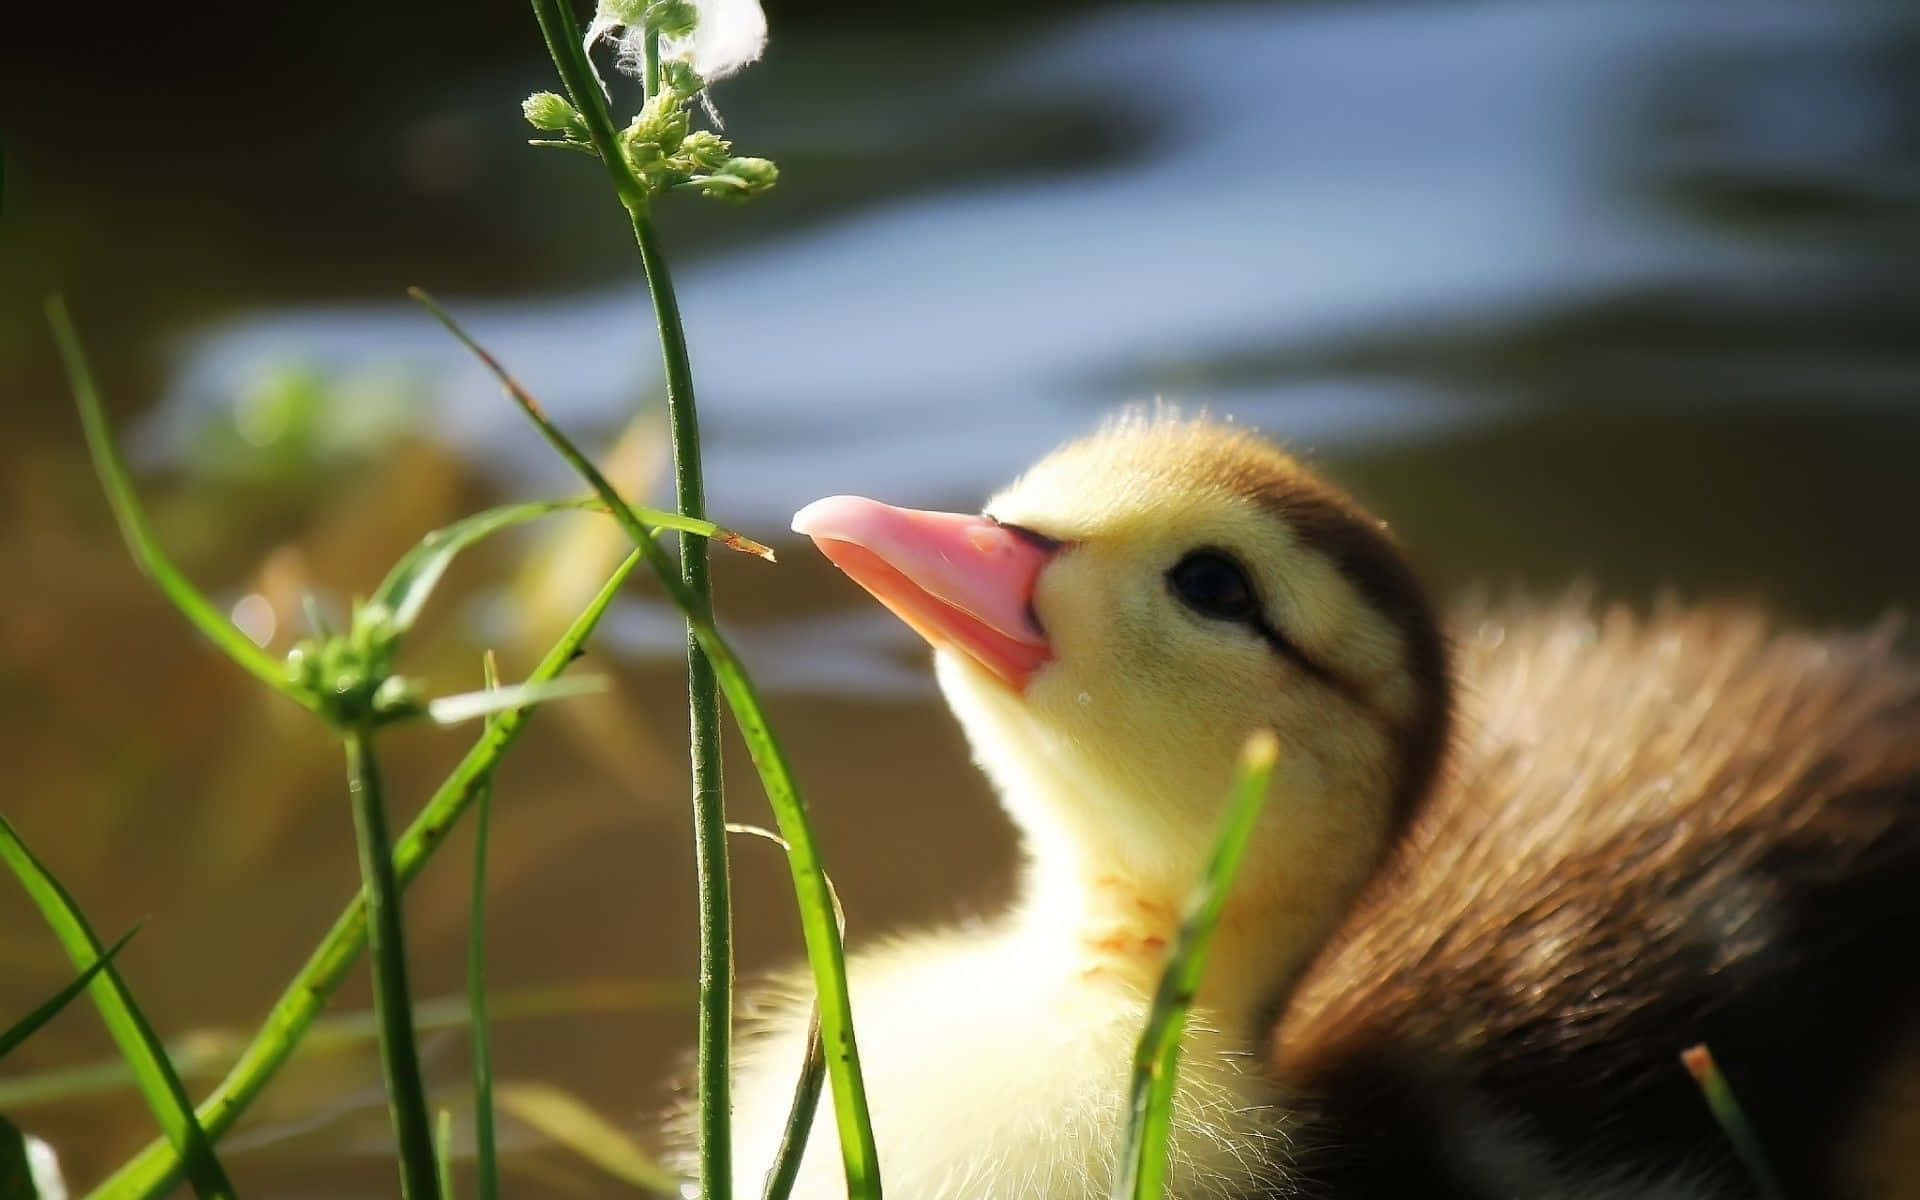 Adorable Yellow Duckling Exploring Nature